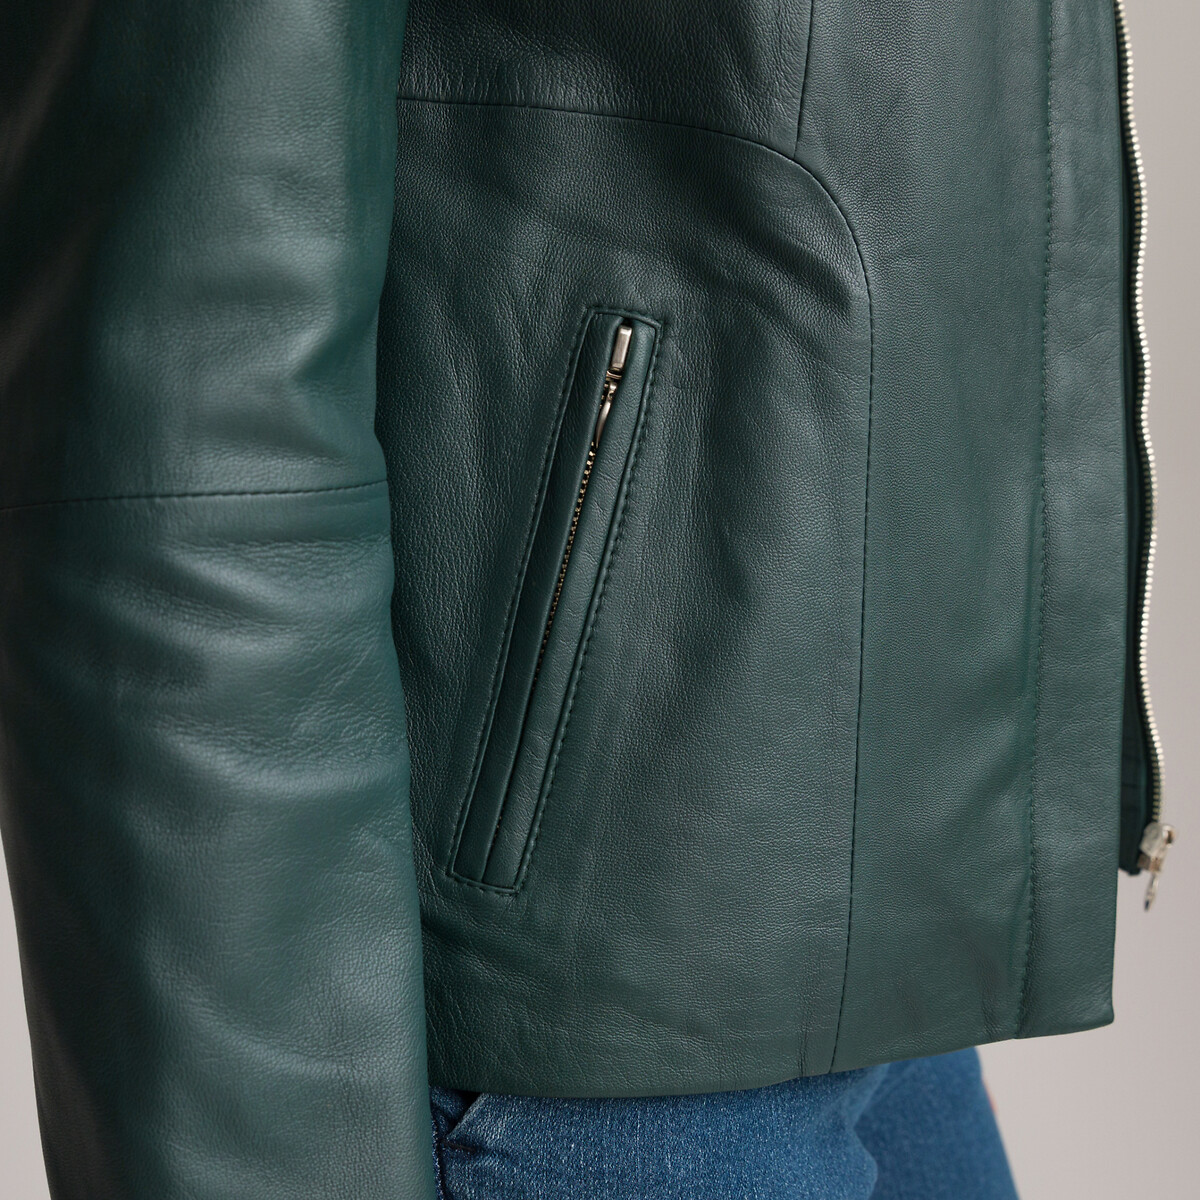 Куртка ANNE WEYBURN Куртка Короткая из кожи ягненка 48 (FR) - 54 (RUS) зеленый, размер 48 (FR) - 54 (RUS) Куртка Короткая из кожи ягненка 48 (FR) - 54 (RUS) зеленый - фото 2